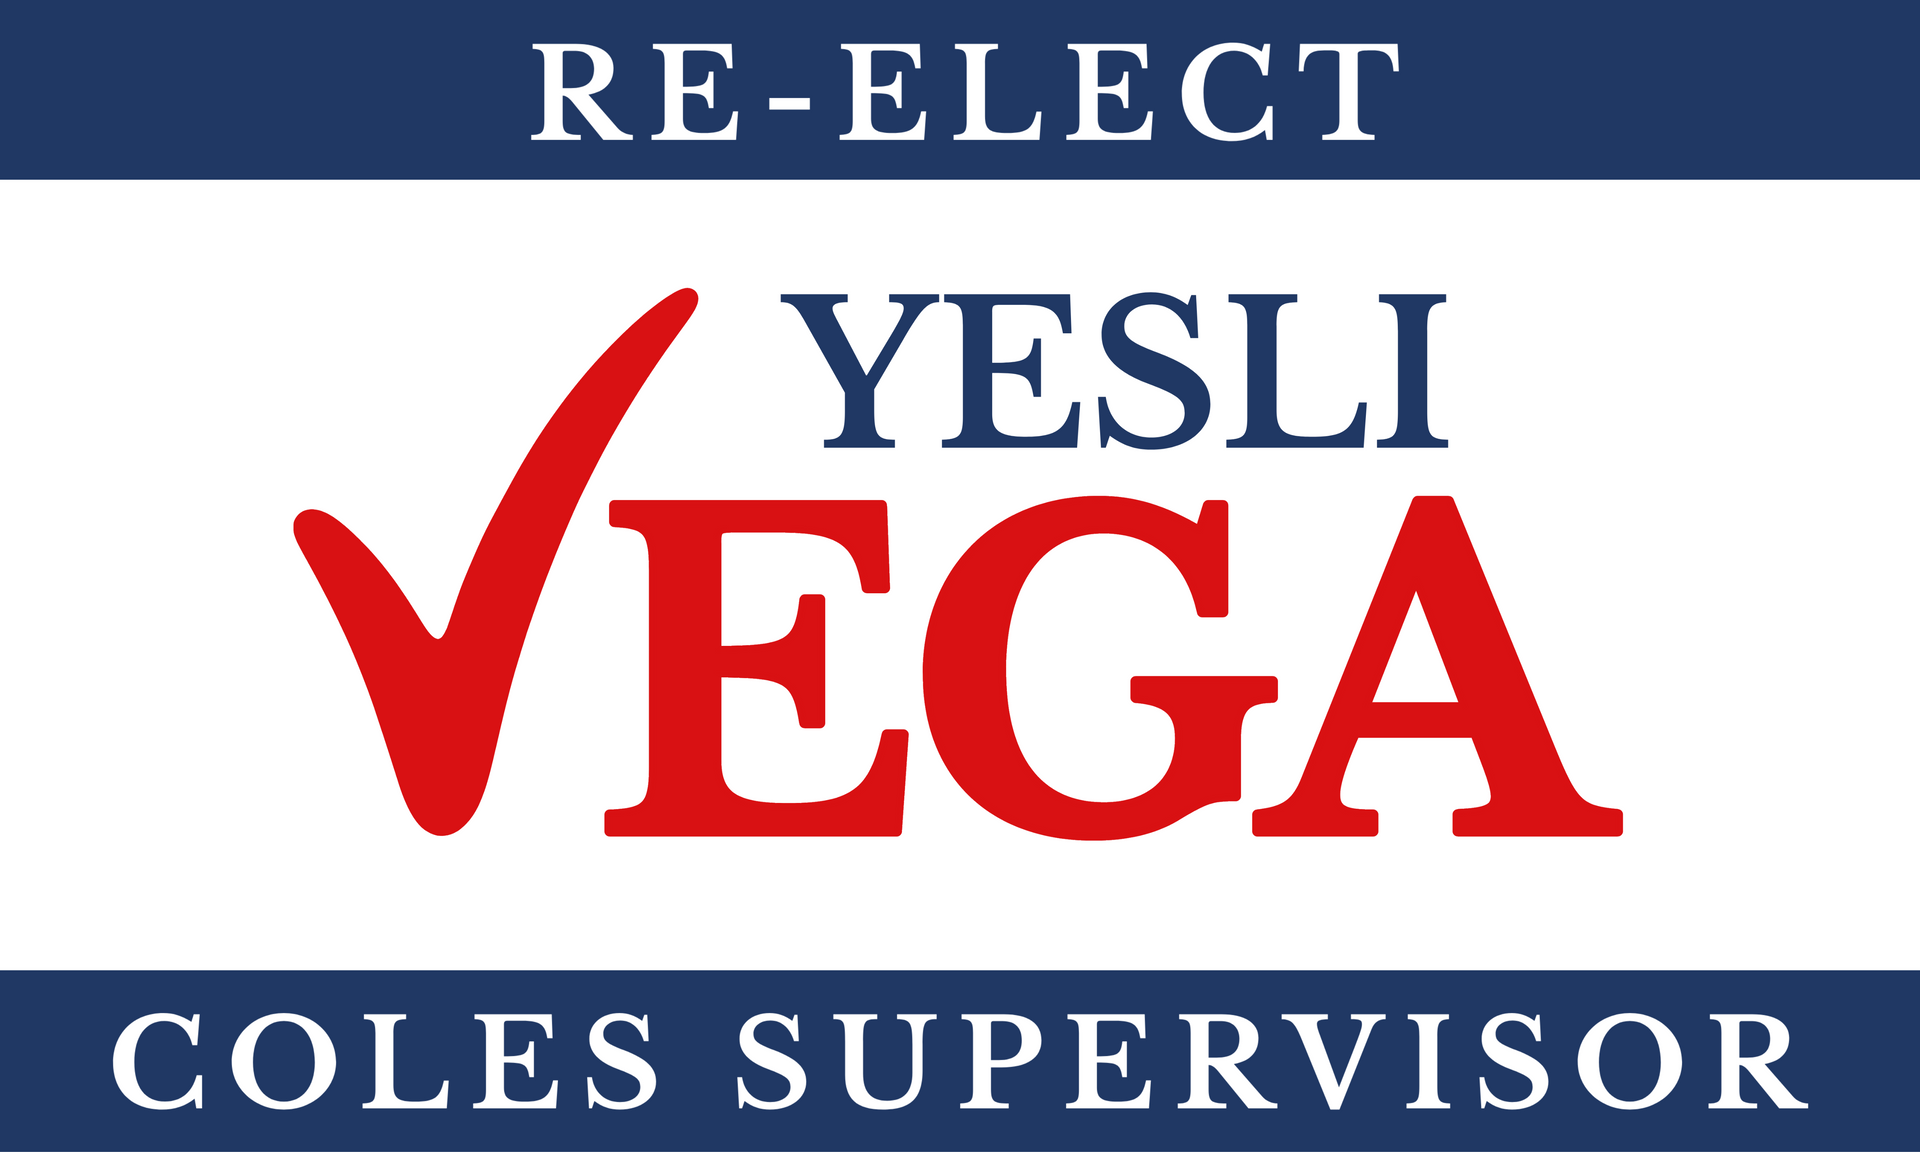 reelect-yesli-vega-coles-supervisor